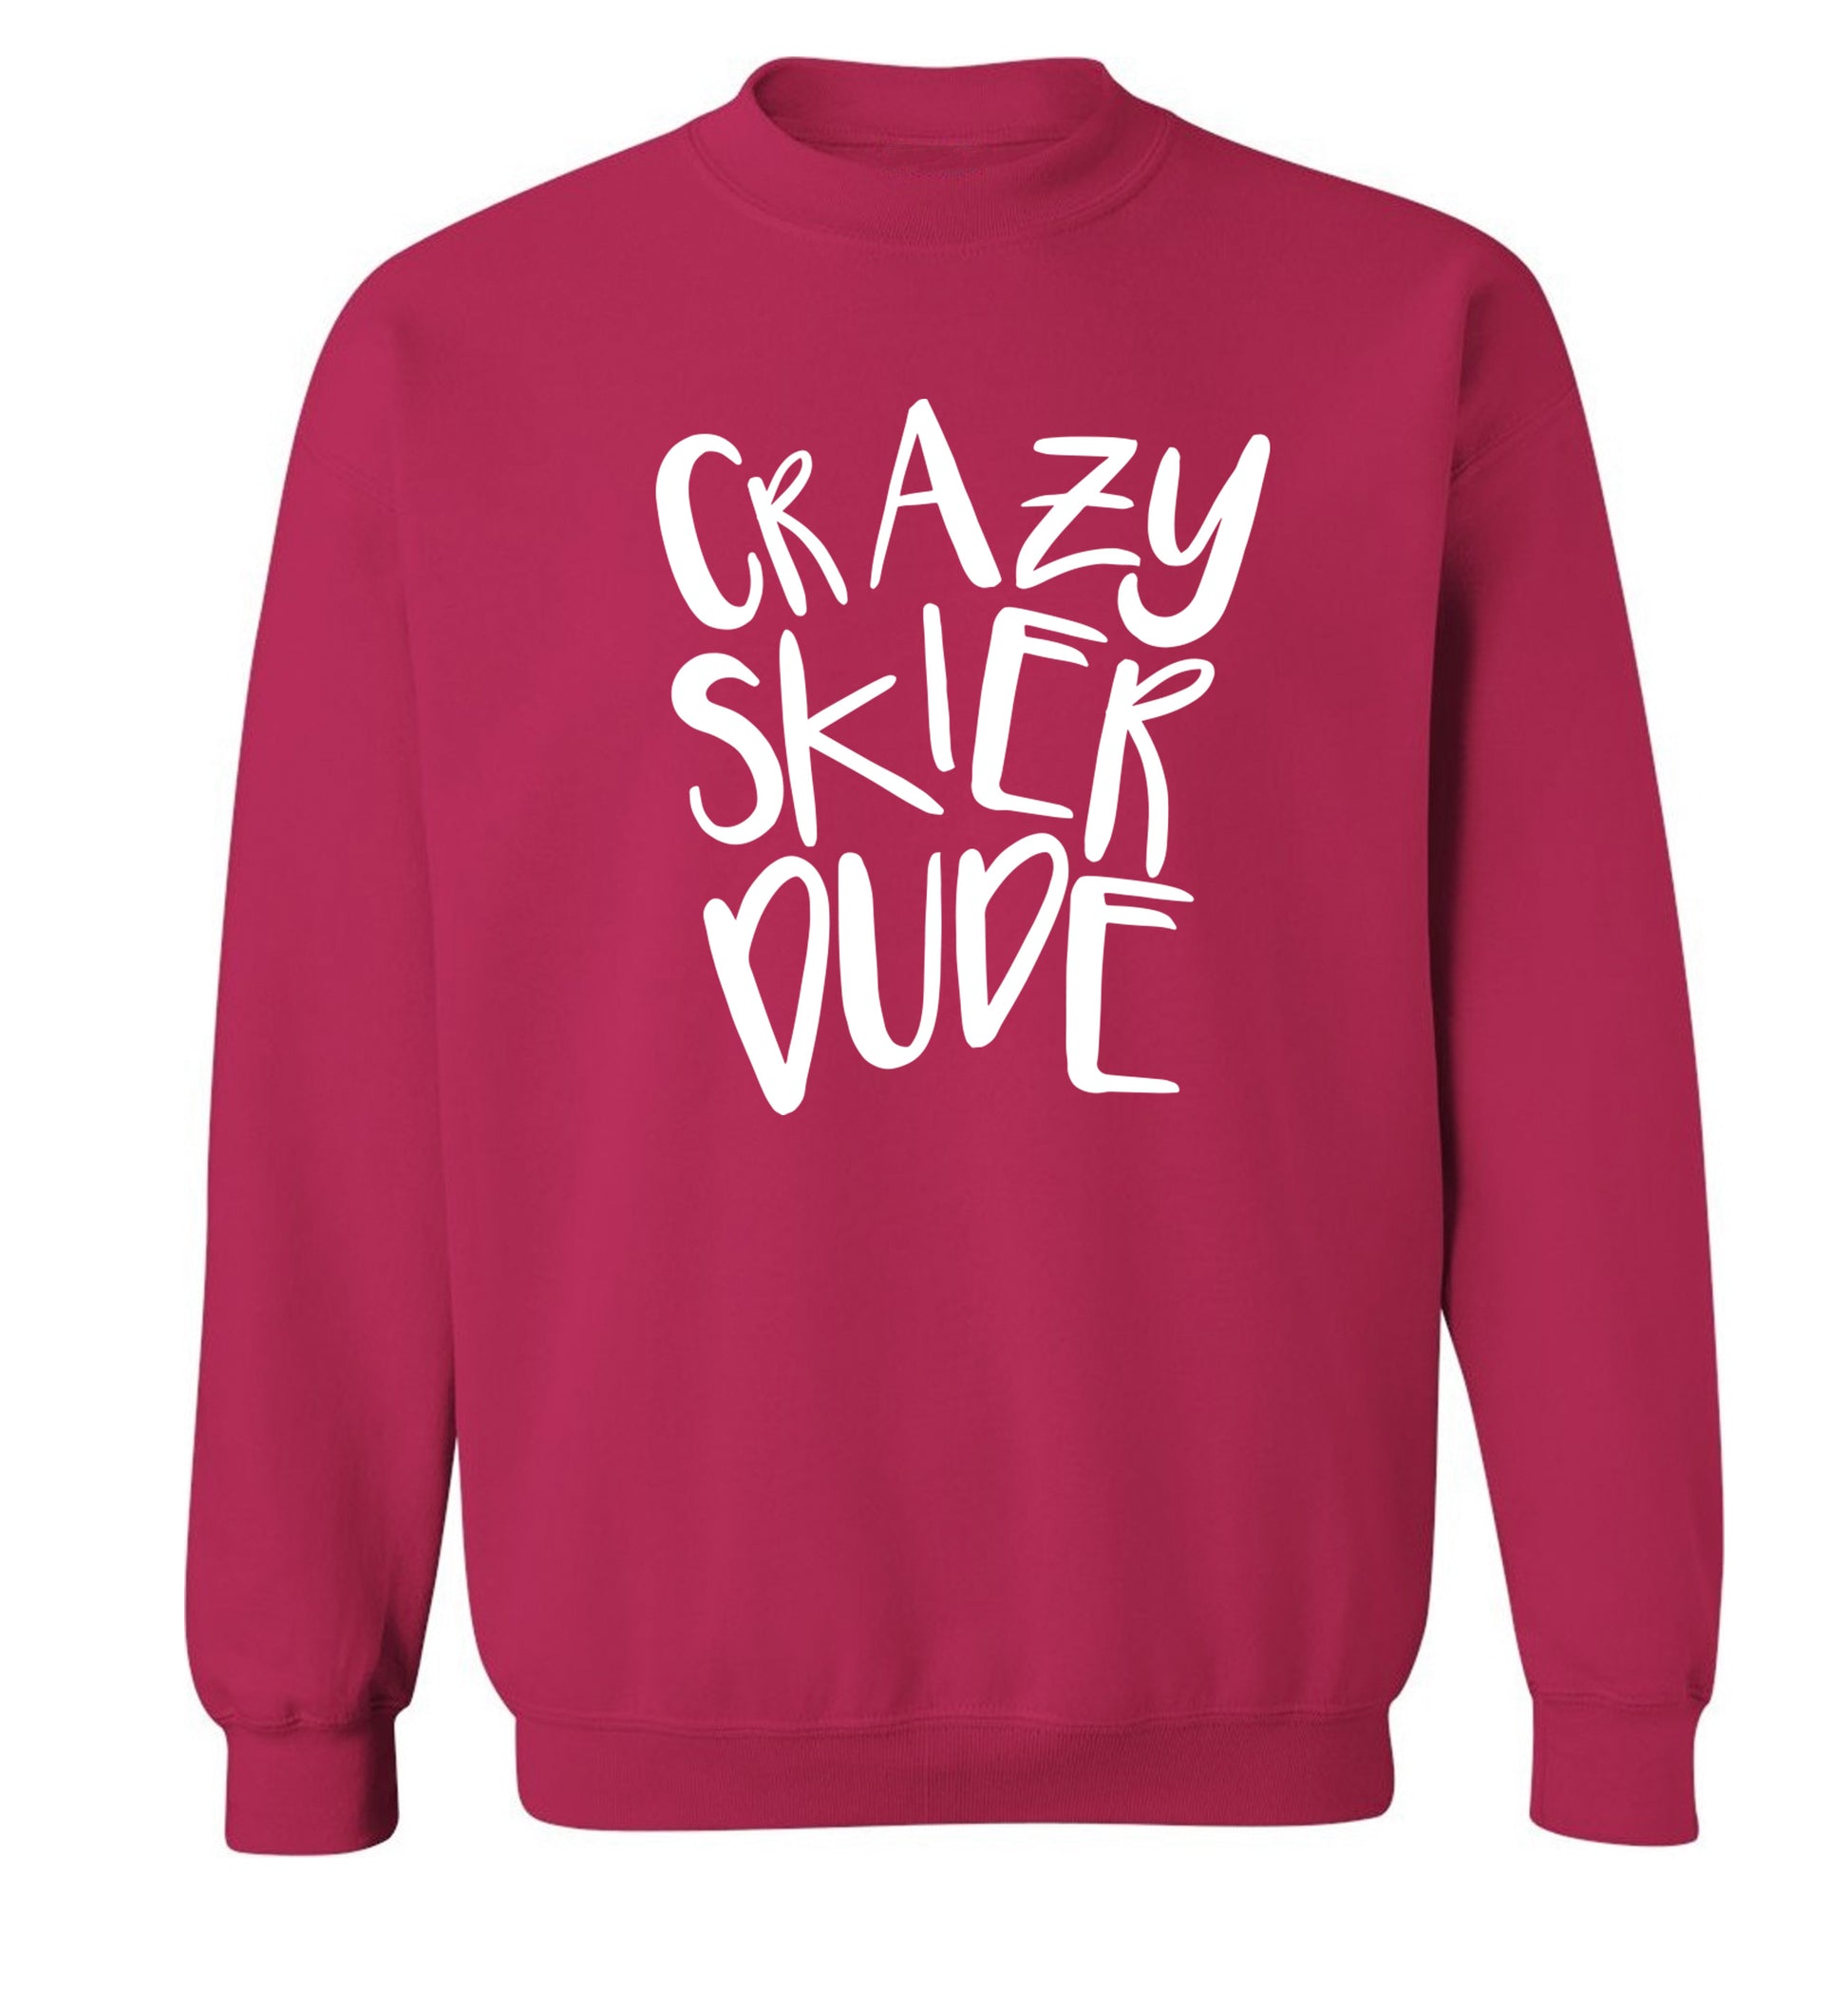 Crazy skier dude Adult's unisexpink Sweater 2XL